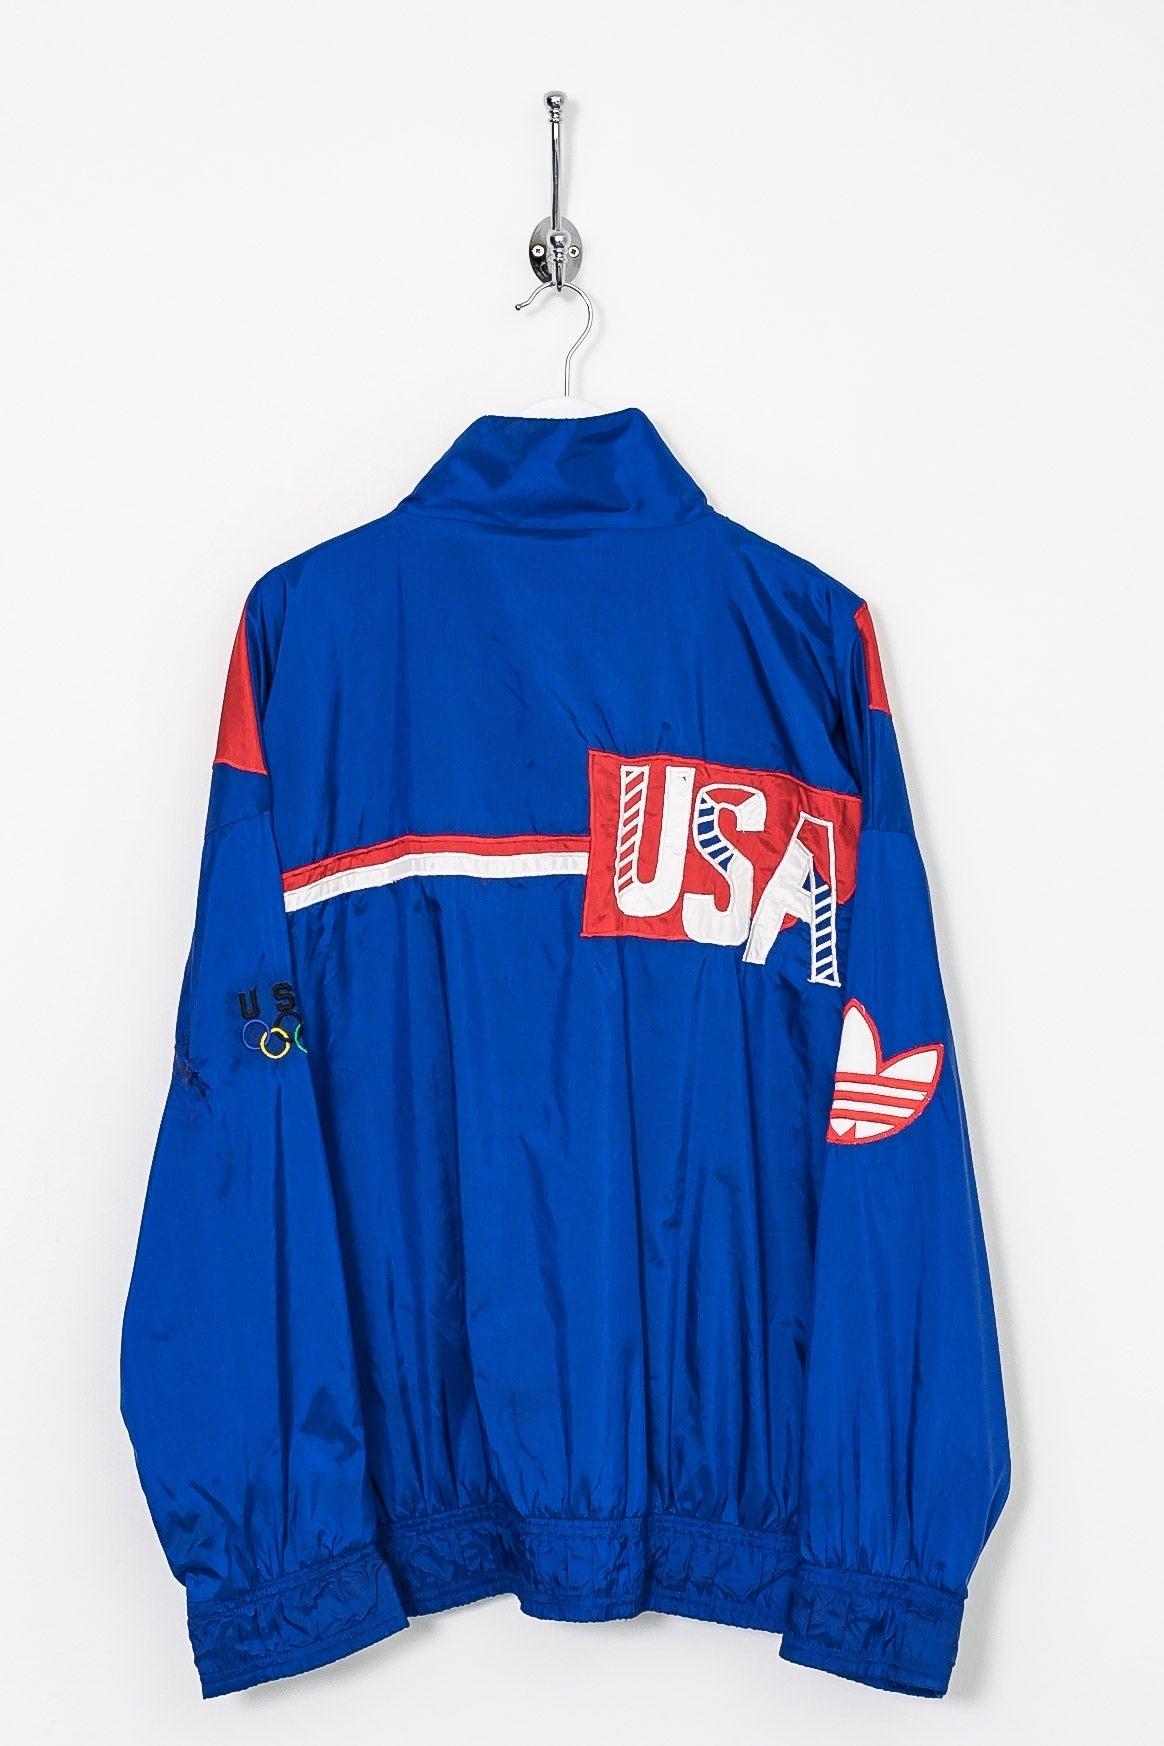 90s Adidas USA Olympics Jacket (M)